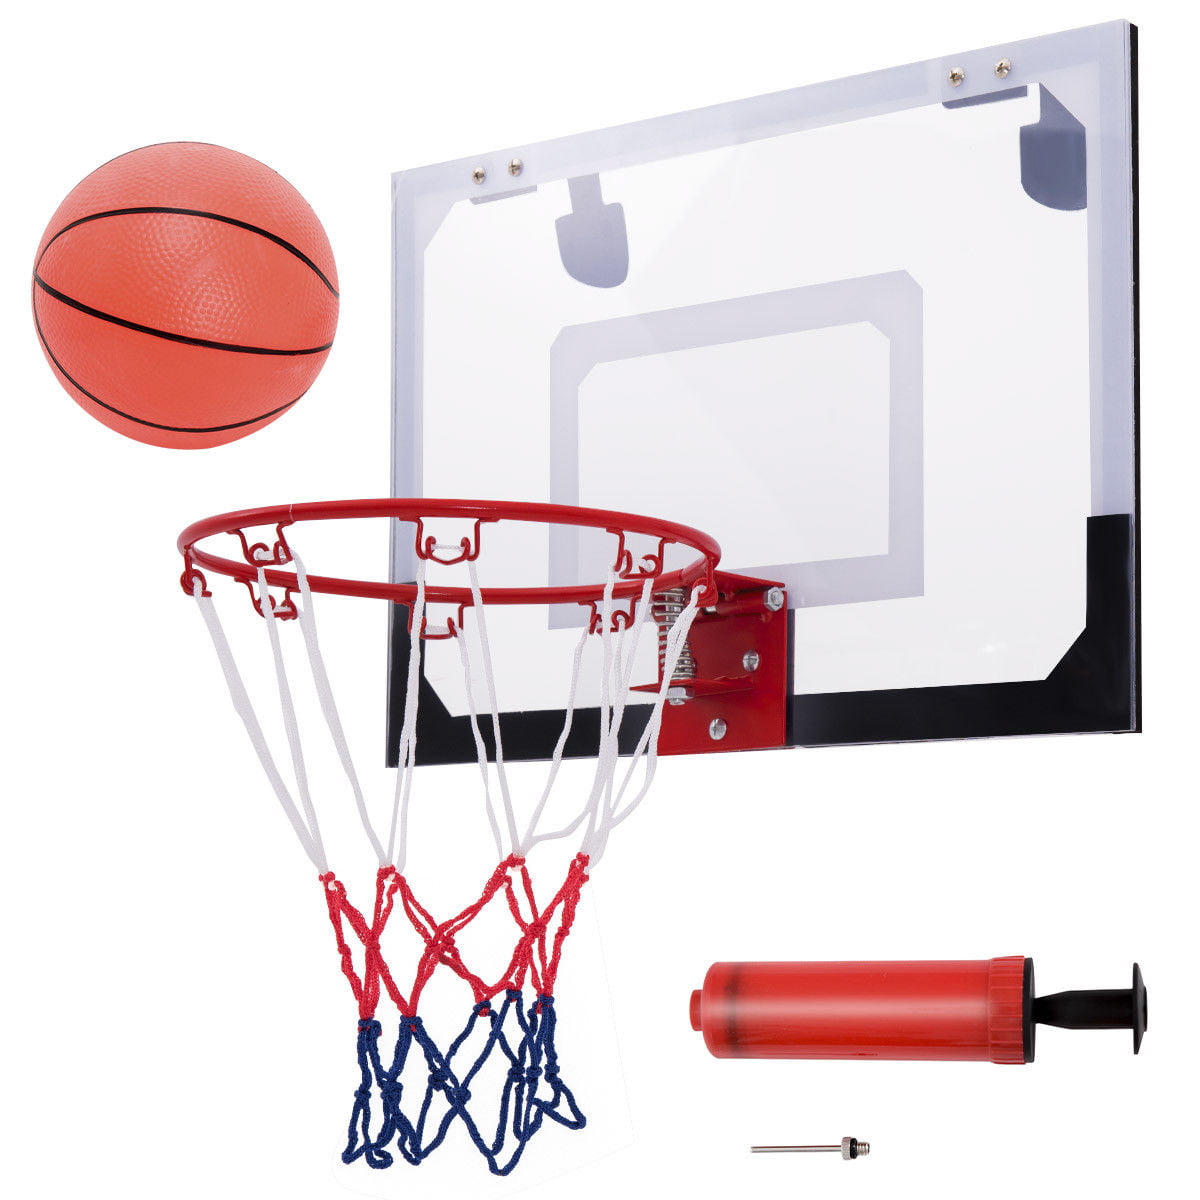 Mini Basketball Hoop Indoor System with Ball Home Wall Door Basketball Net Goal 